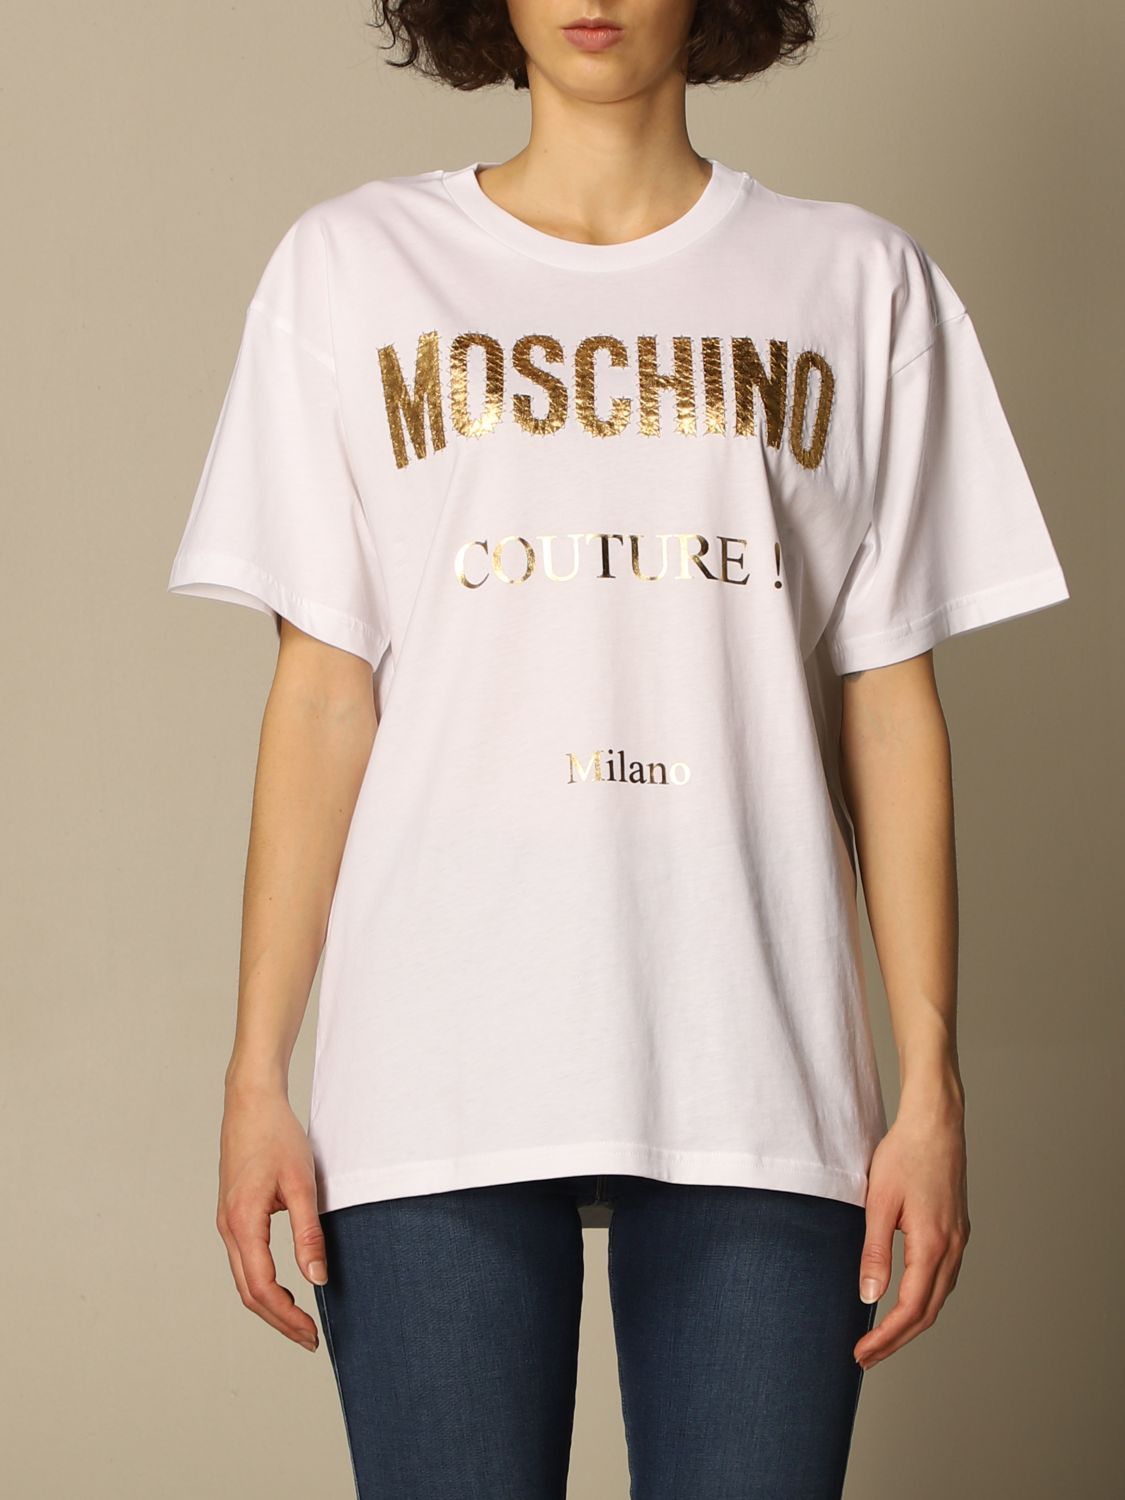 MOSCHINO COUTURE: T-shirt with laminated logo - White | Moschino ...